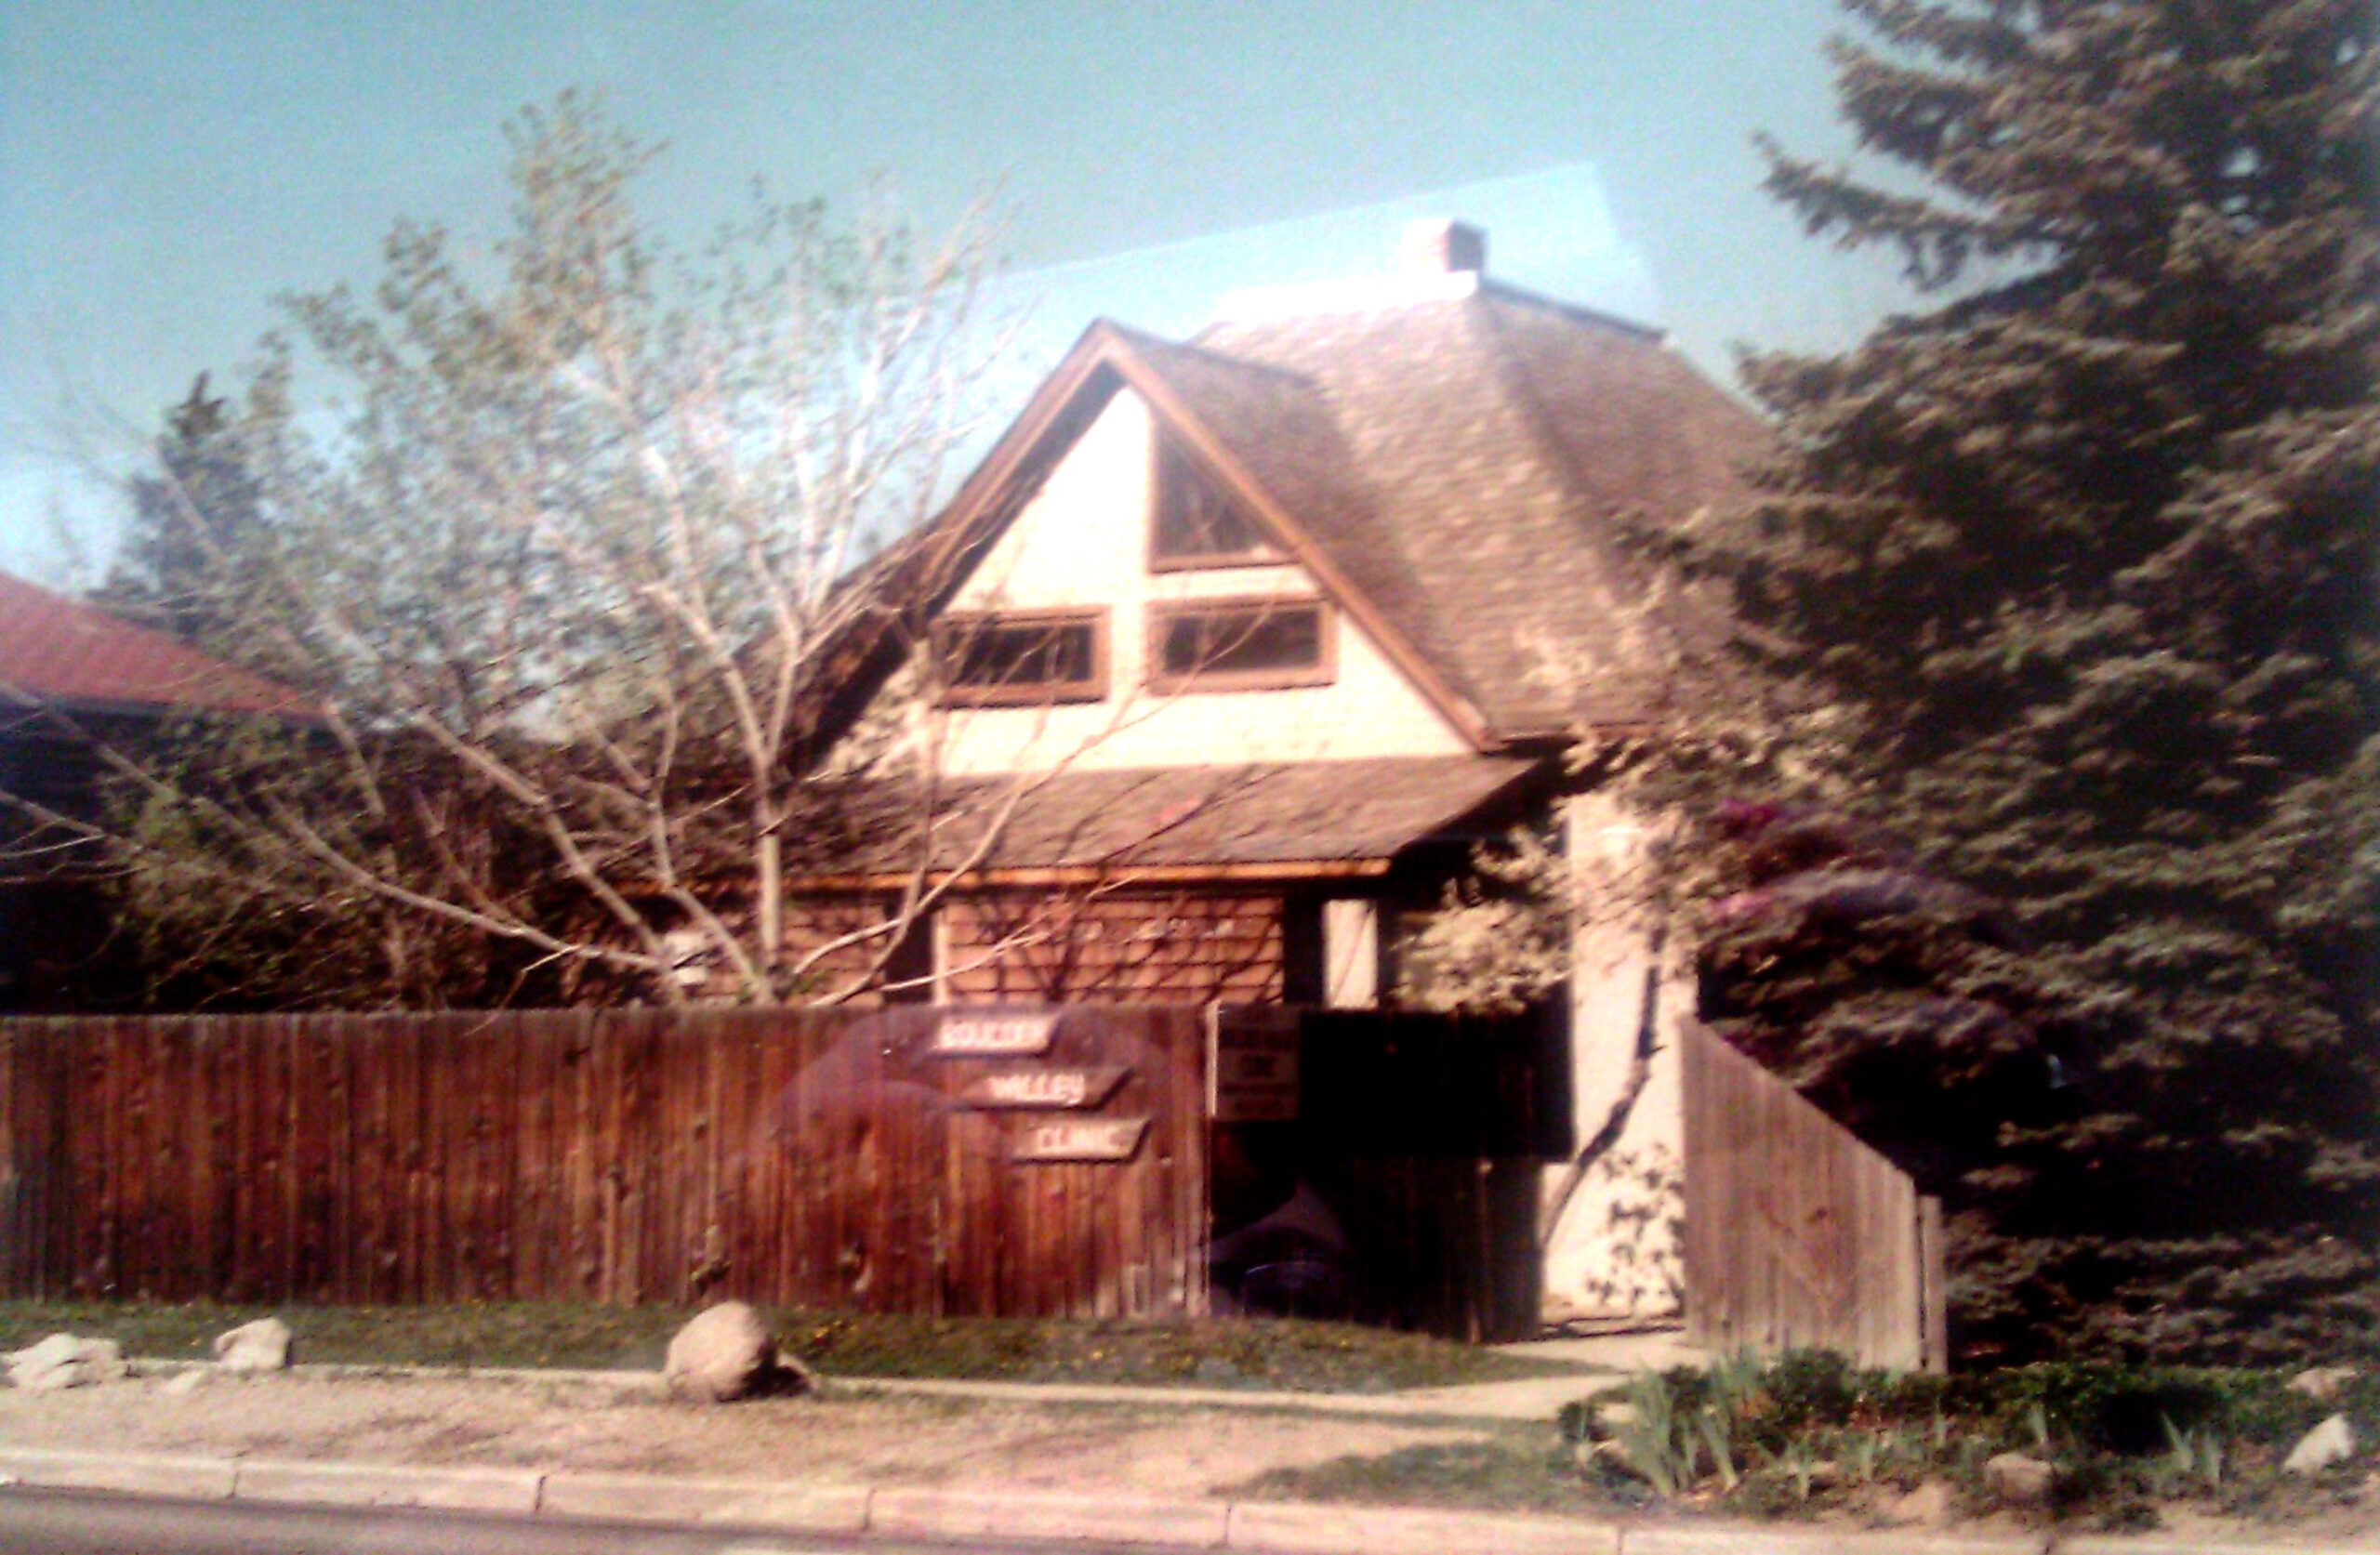 Original Boulder Valley Clinic in 1973